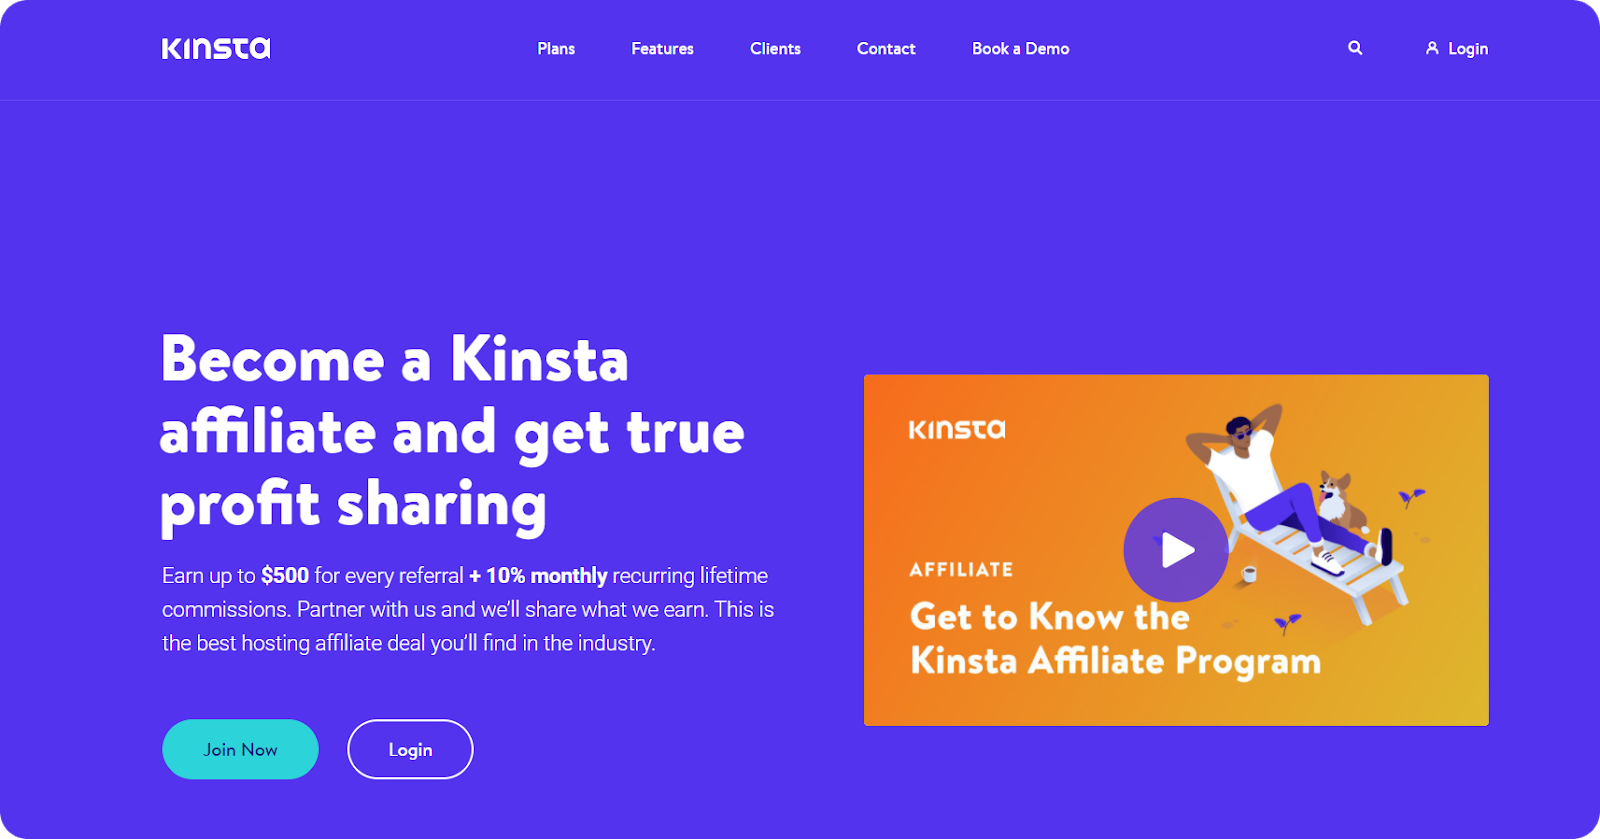 Kintsa Affiliate Program - one of the best affiliate programs in 2021